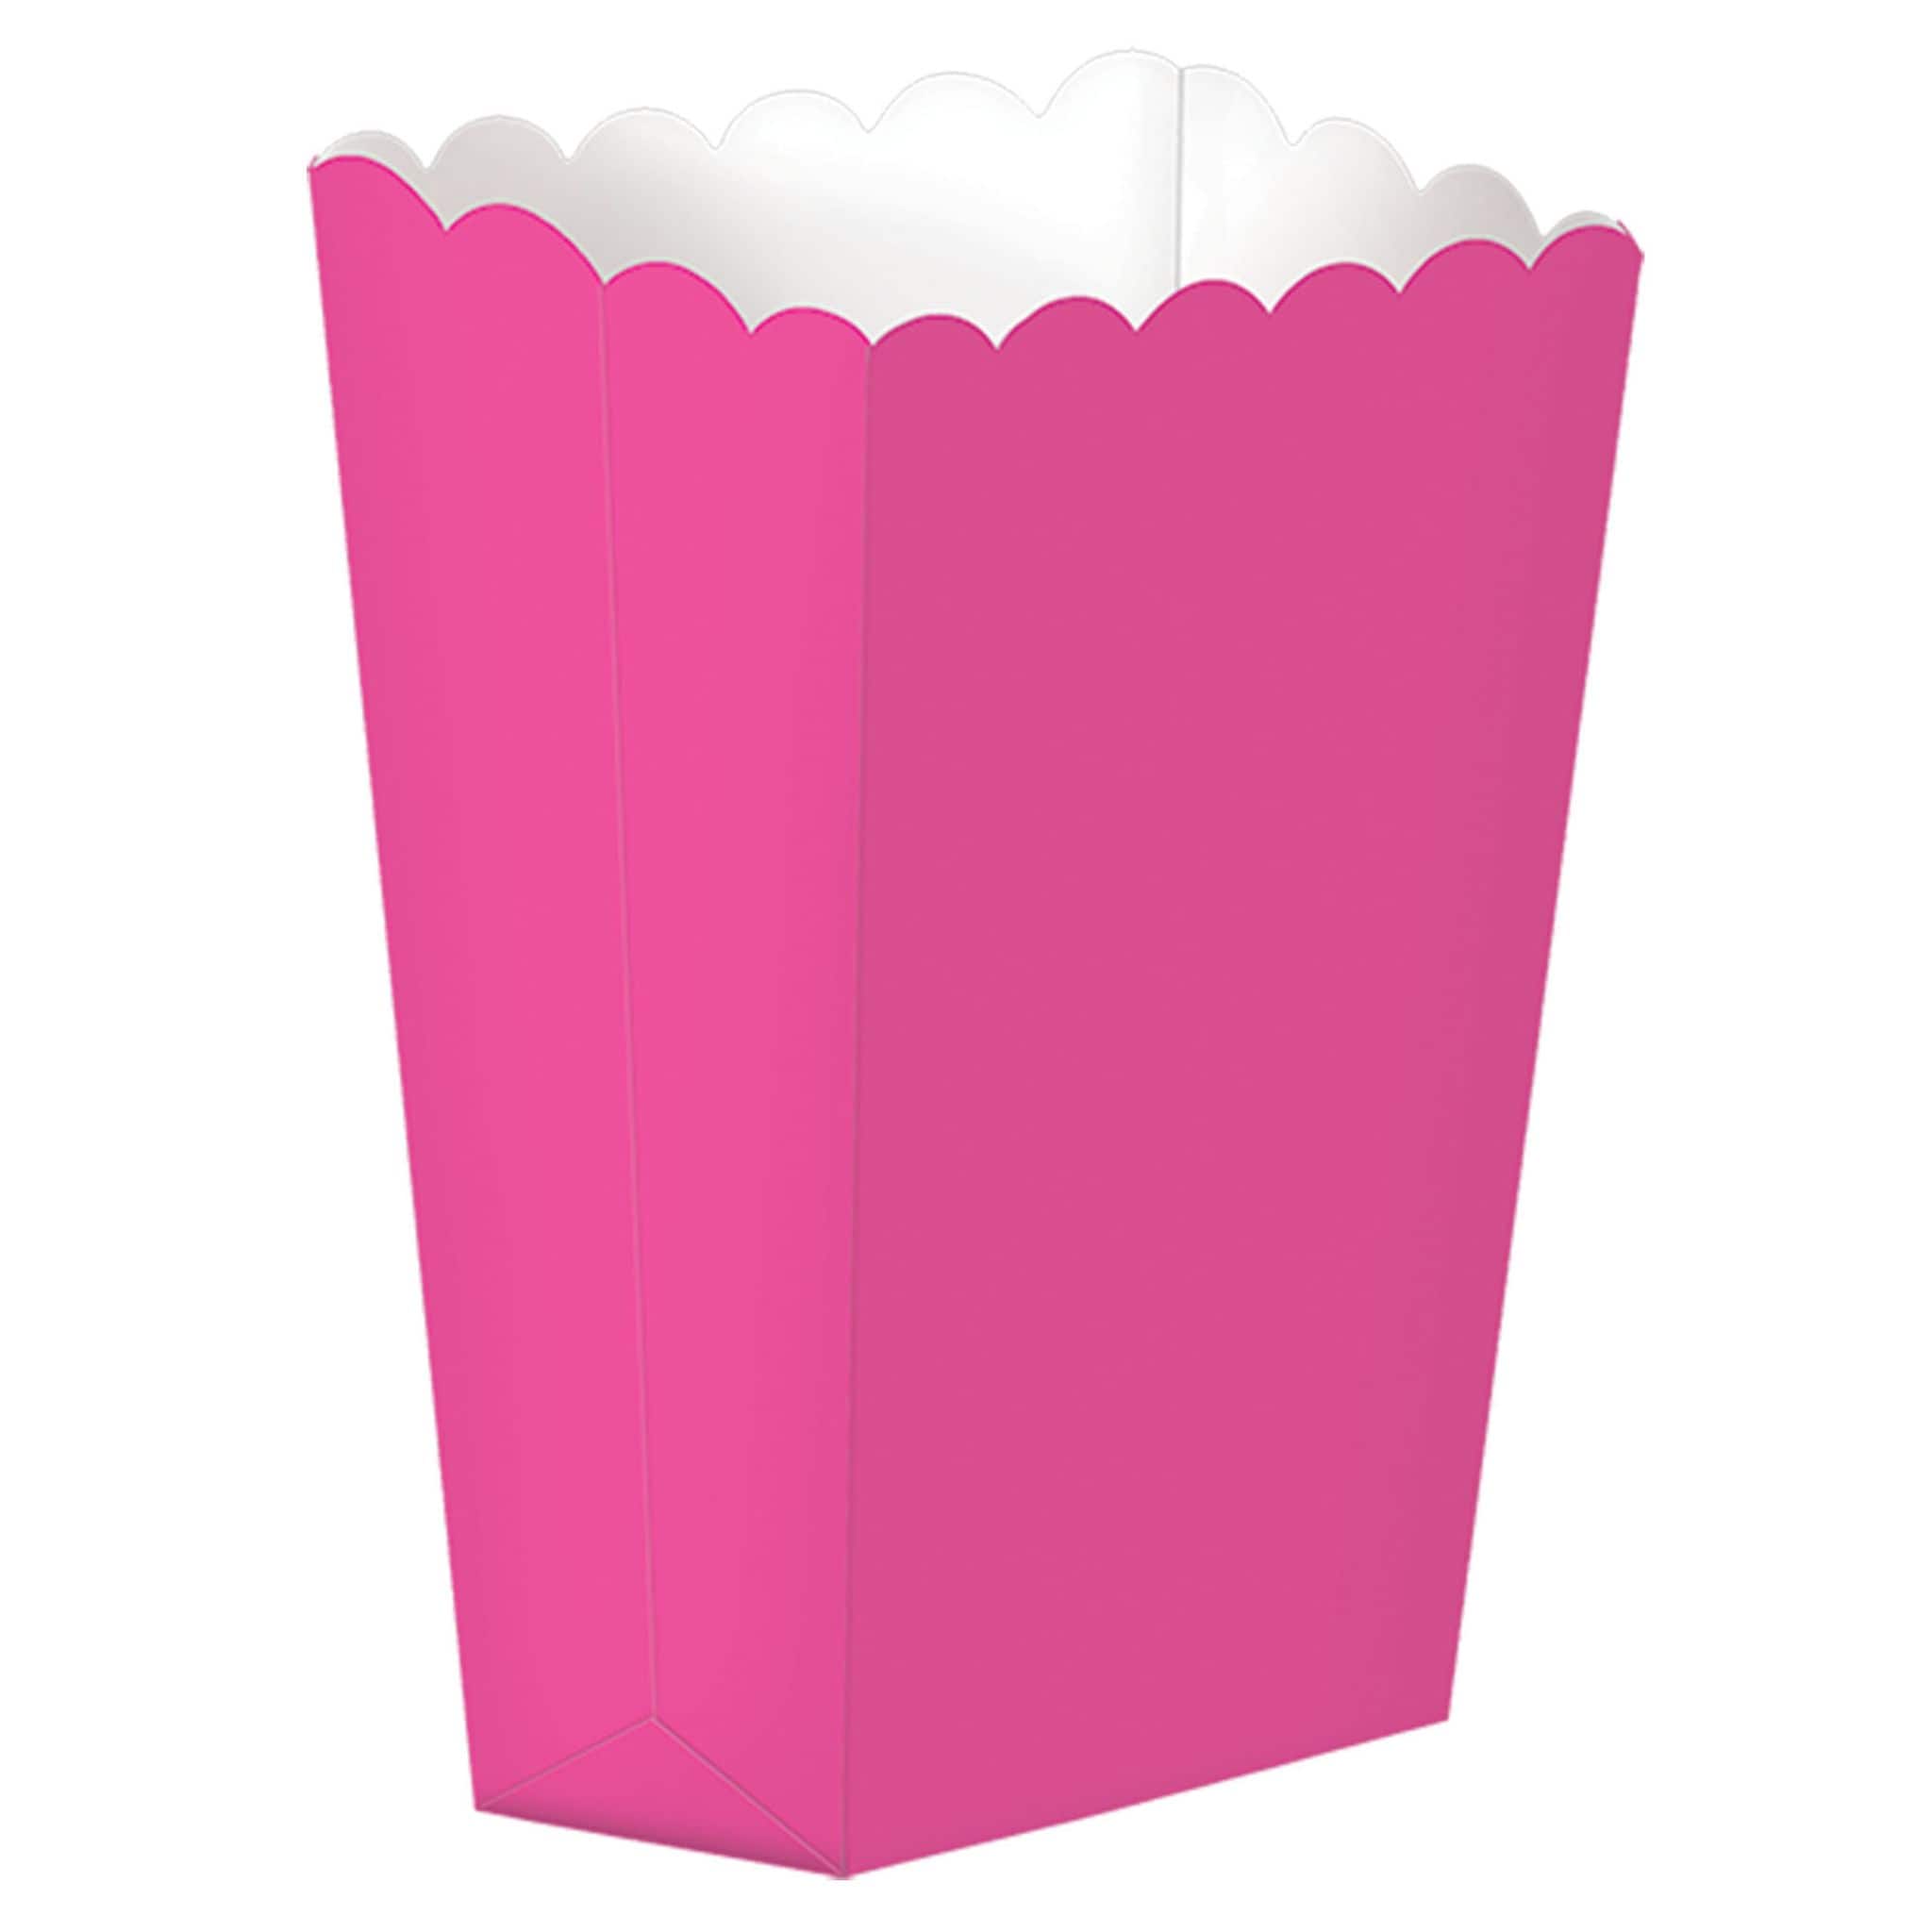 5.25" Paper Popcorn Boxes, 40ct.